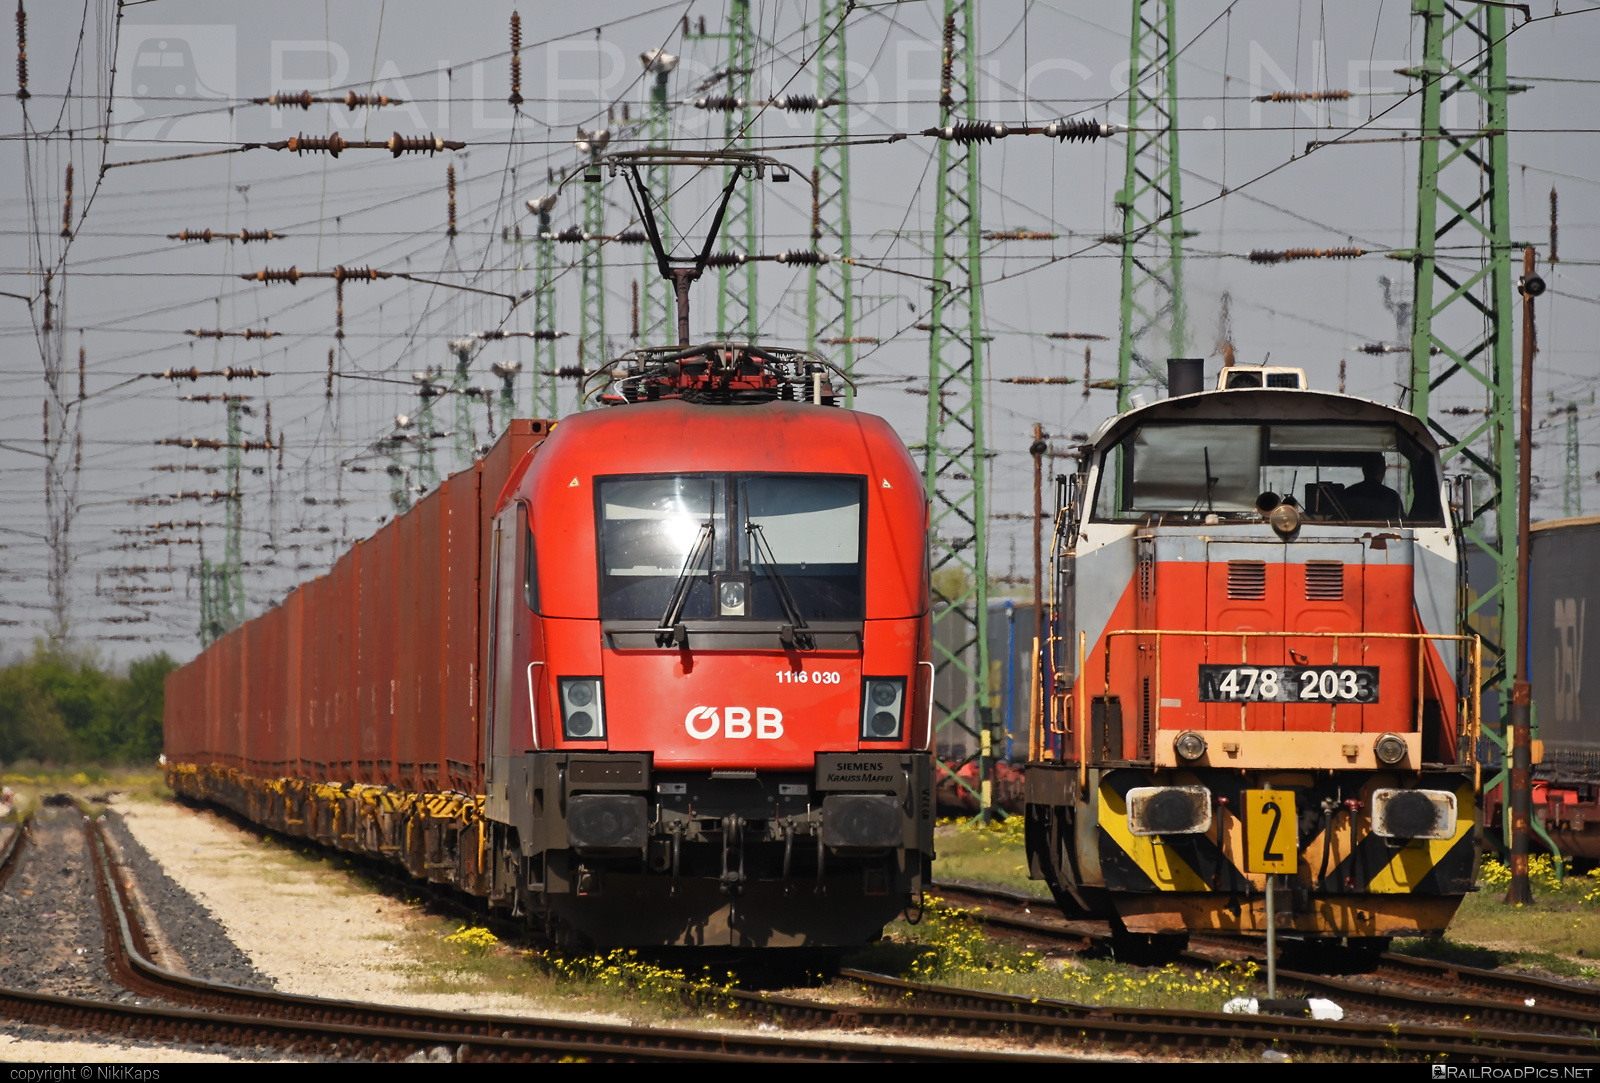 Siemens ES 64 U2 - 1116 030 operated by Rail Cargo Hungaria ZRt. #es64 #es64u2 #eurosprinter #obb #osterreichischebundesbahnen #rch #siemens #siemensEs64 #siemensEs64u2 #siemenstaurus #taurus #tauruslocomotive